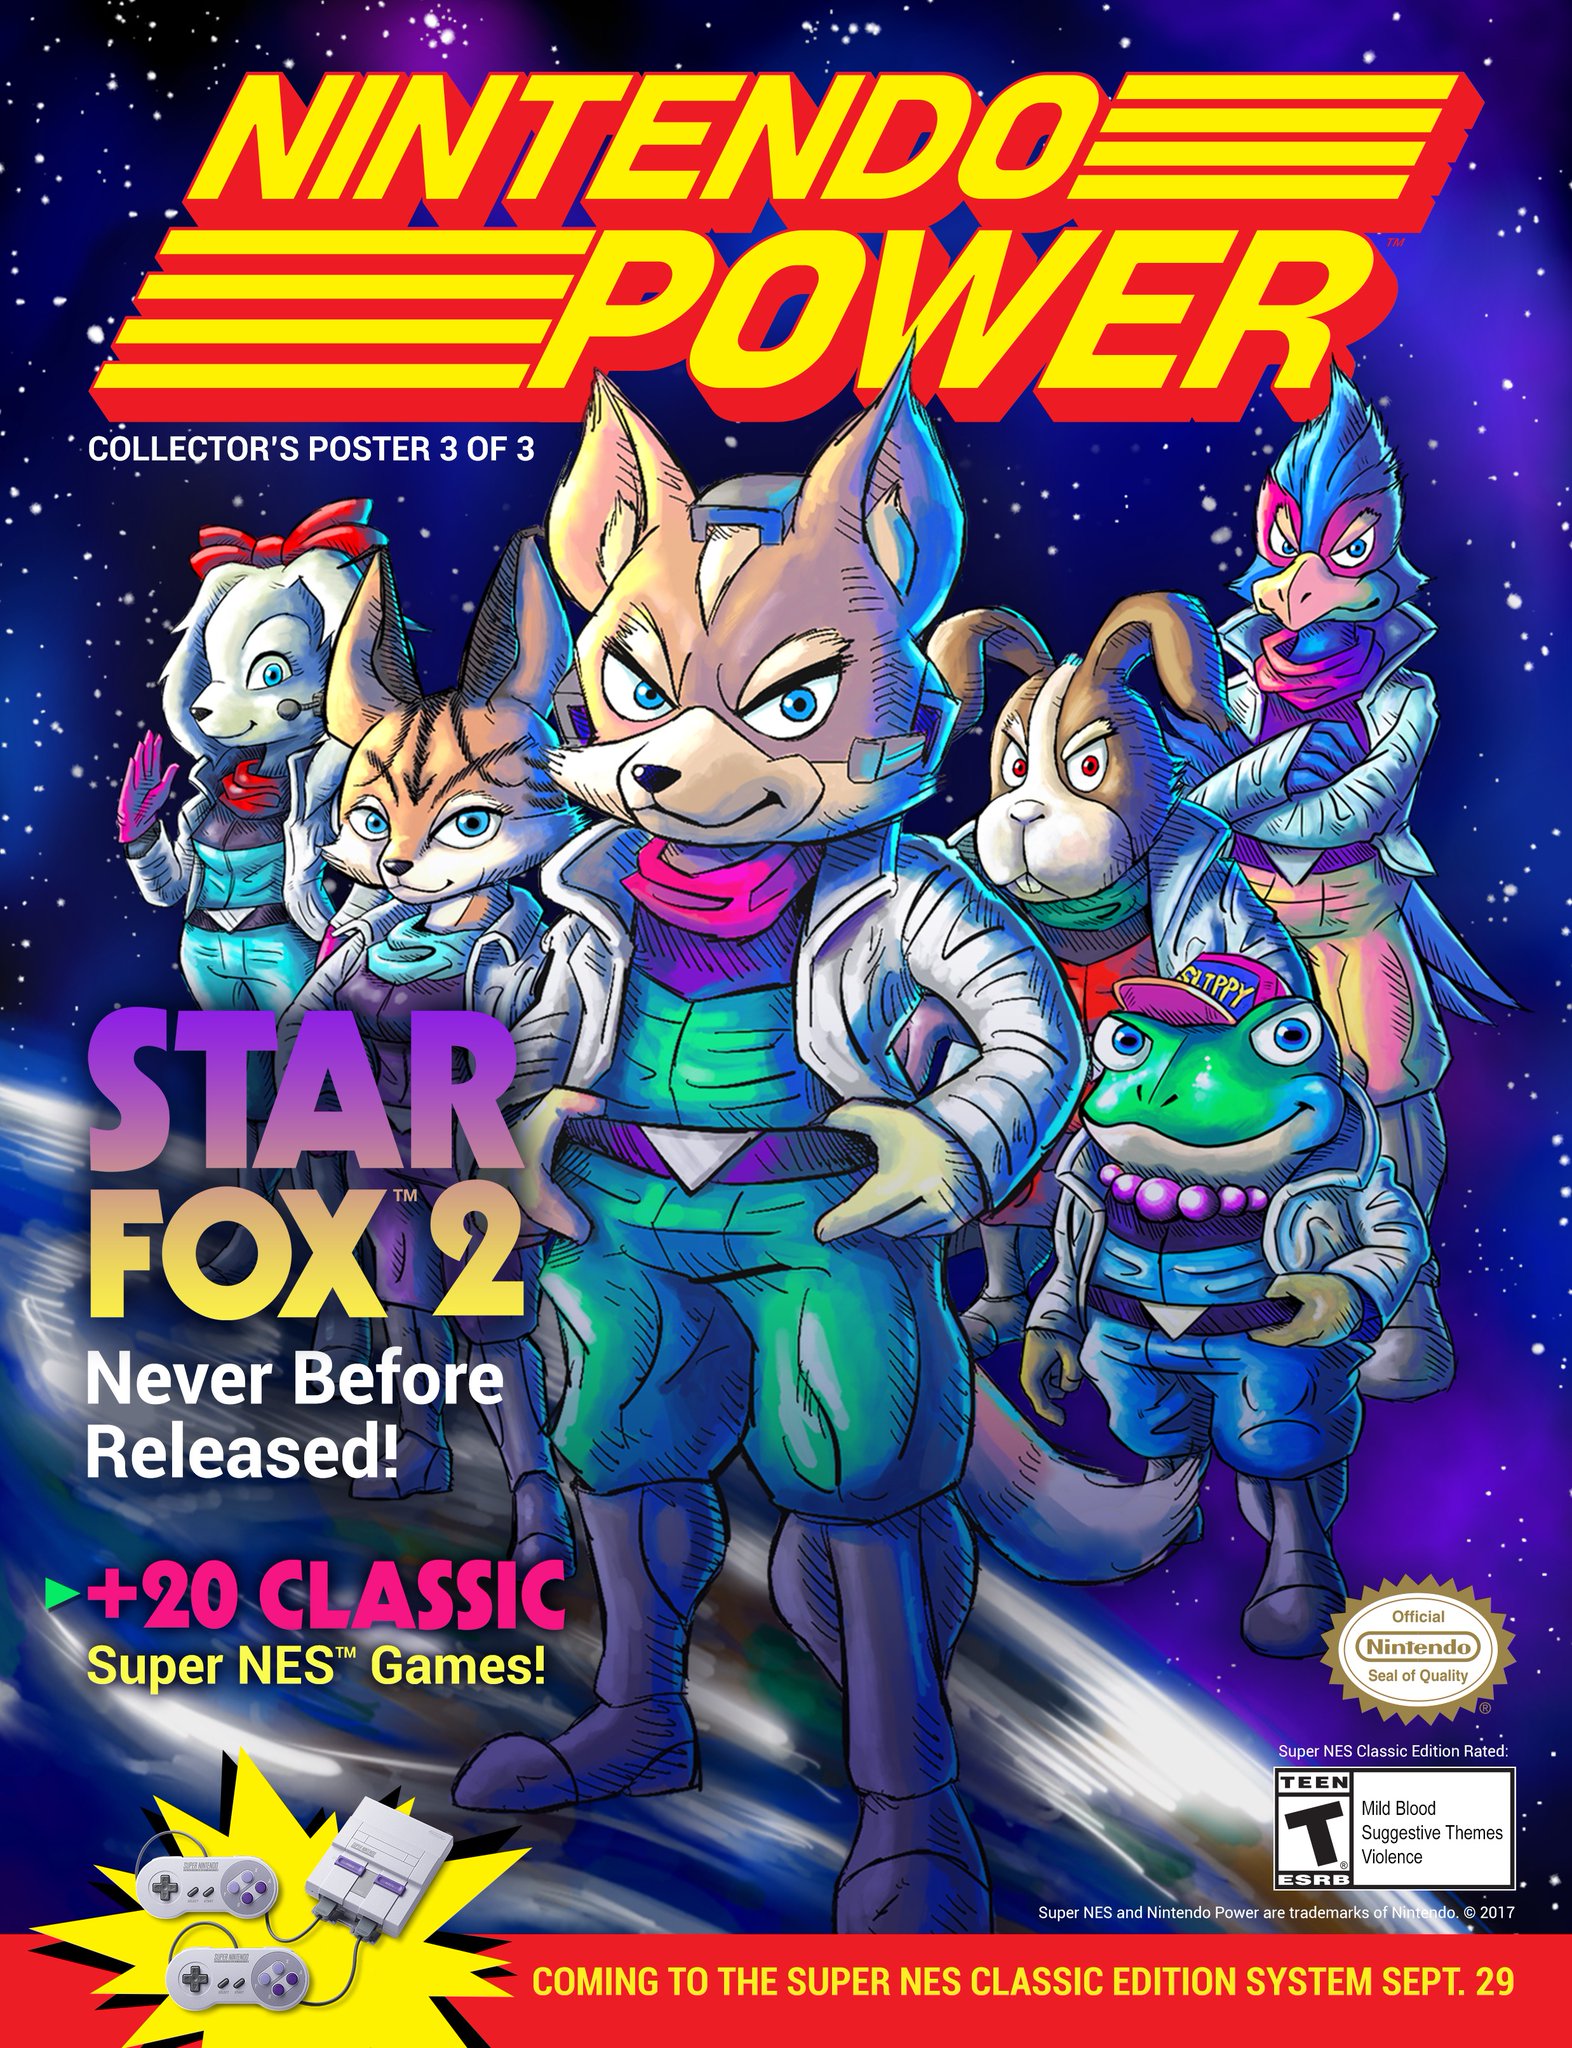 Nintendo Power Star fox 2 Snes classic